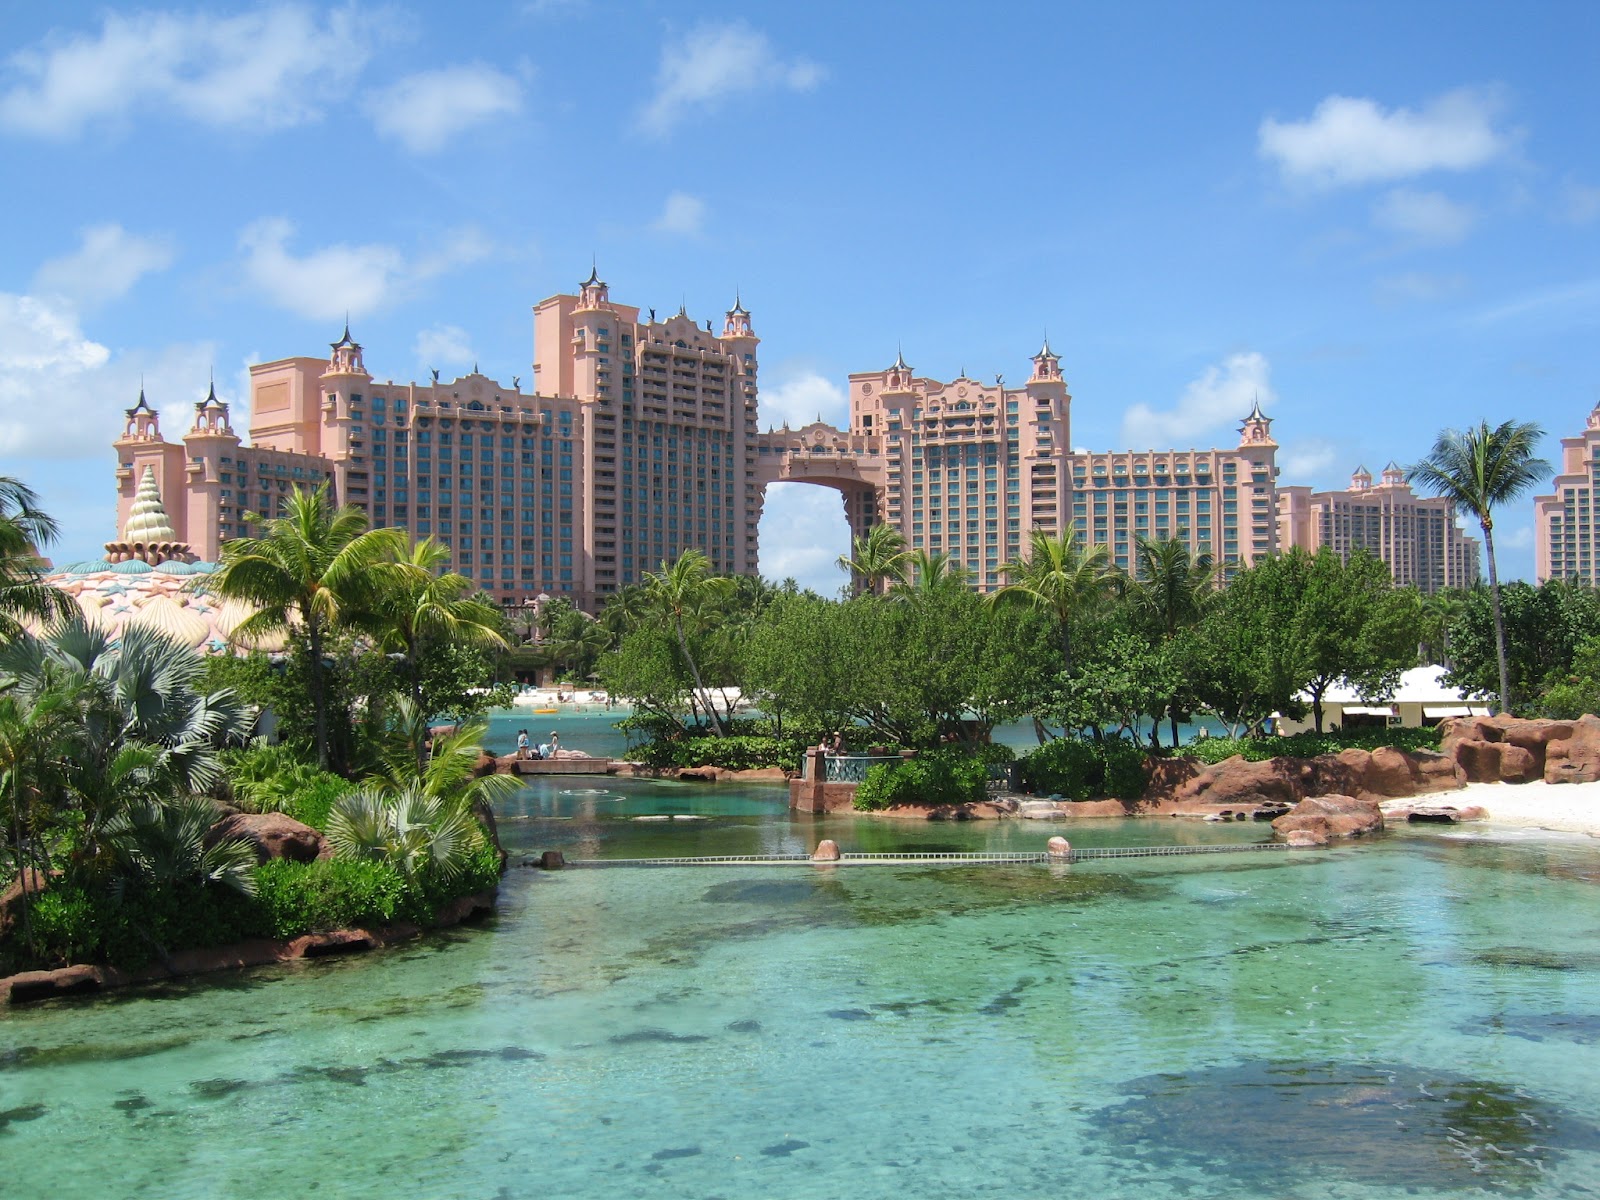 Atlantis Paradise Island Wallpapers